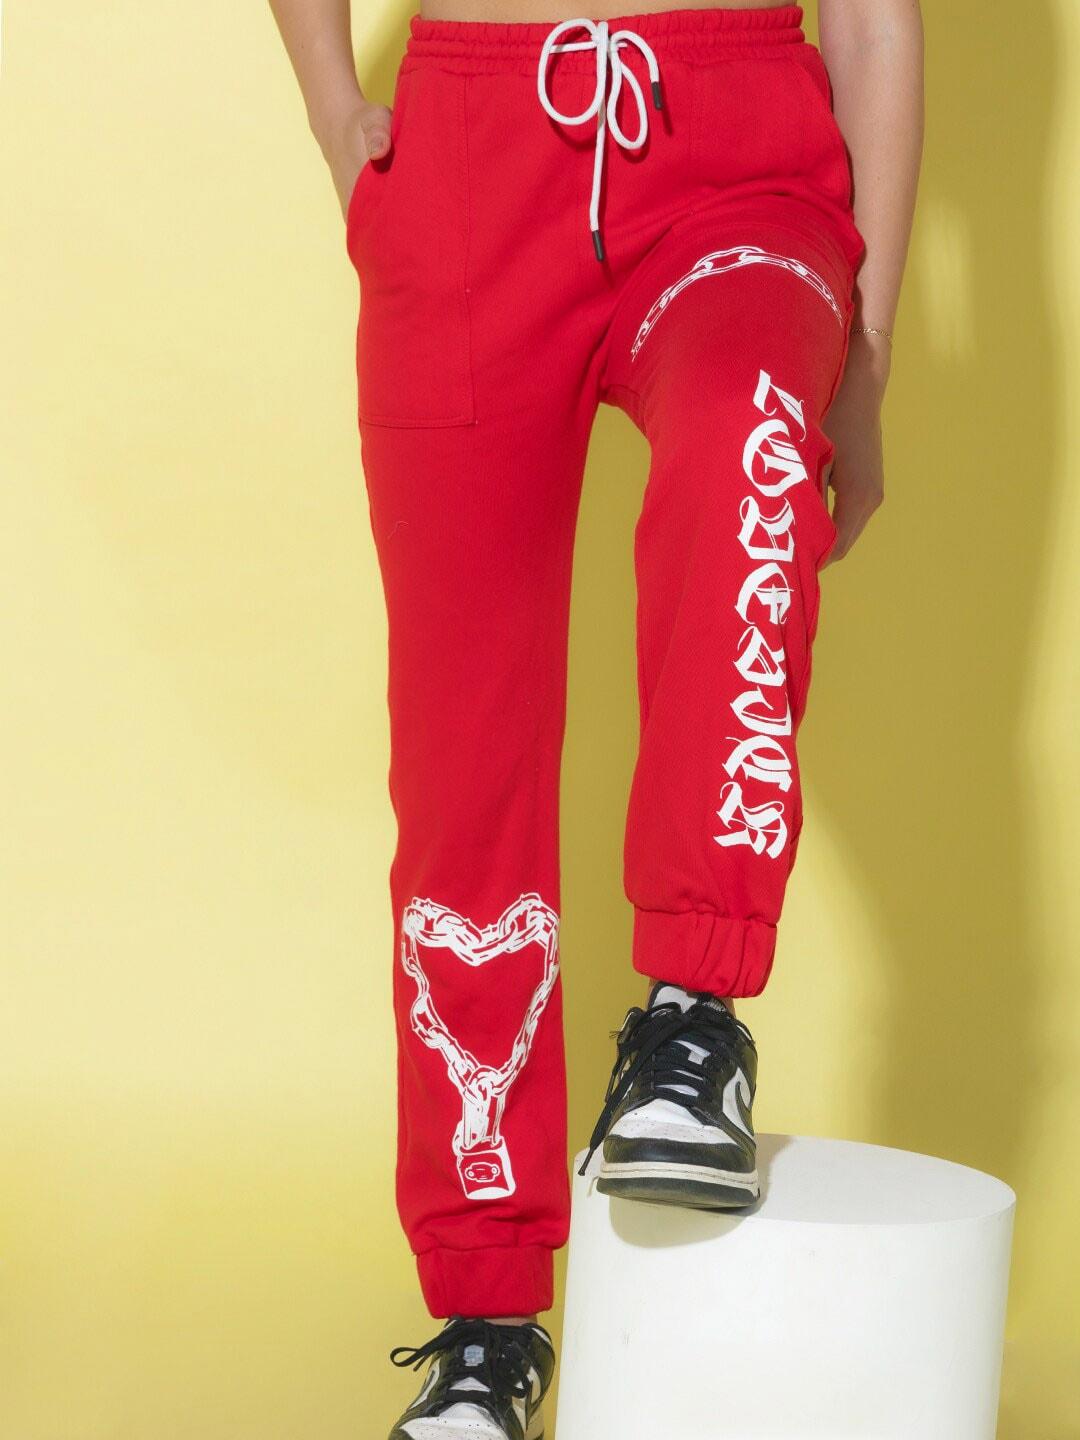 stylecast-x-hersheinbox-women-red-trousers